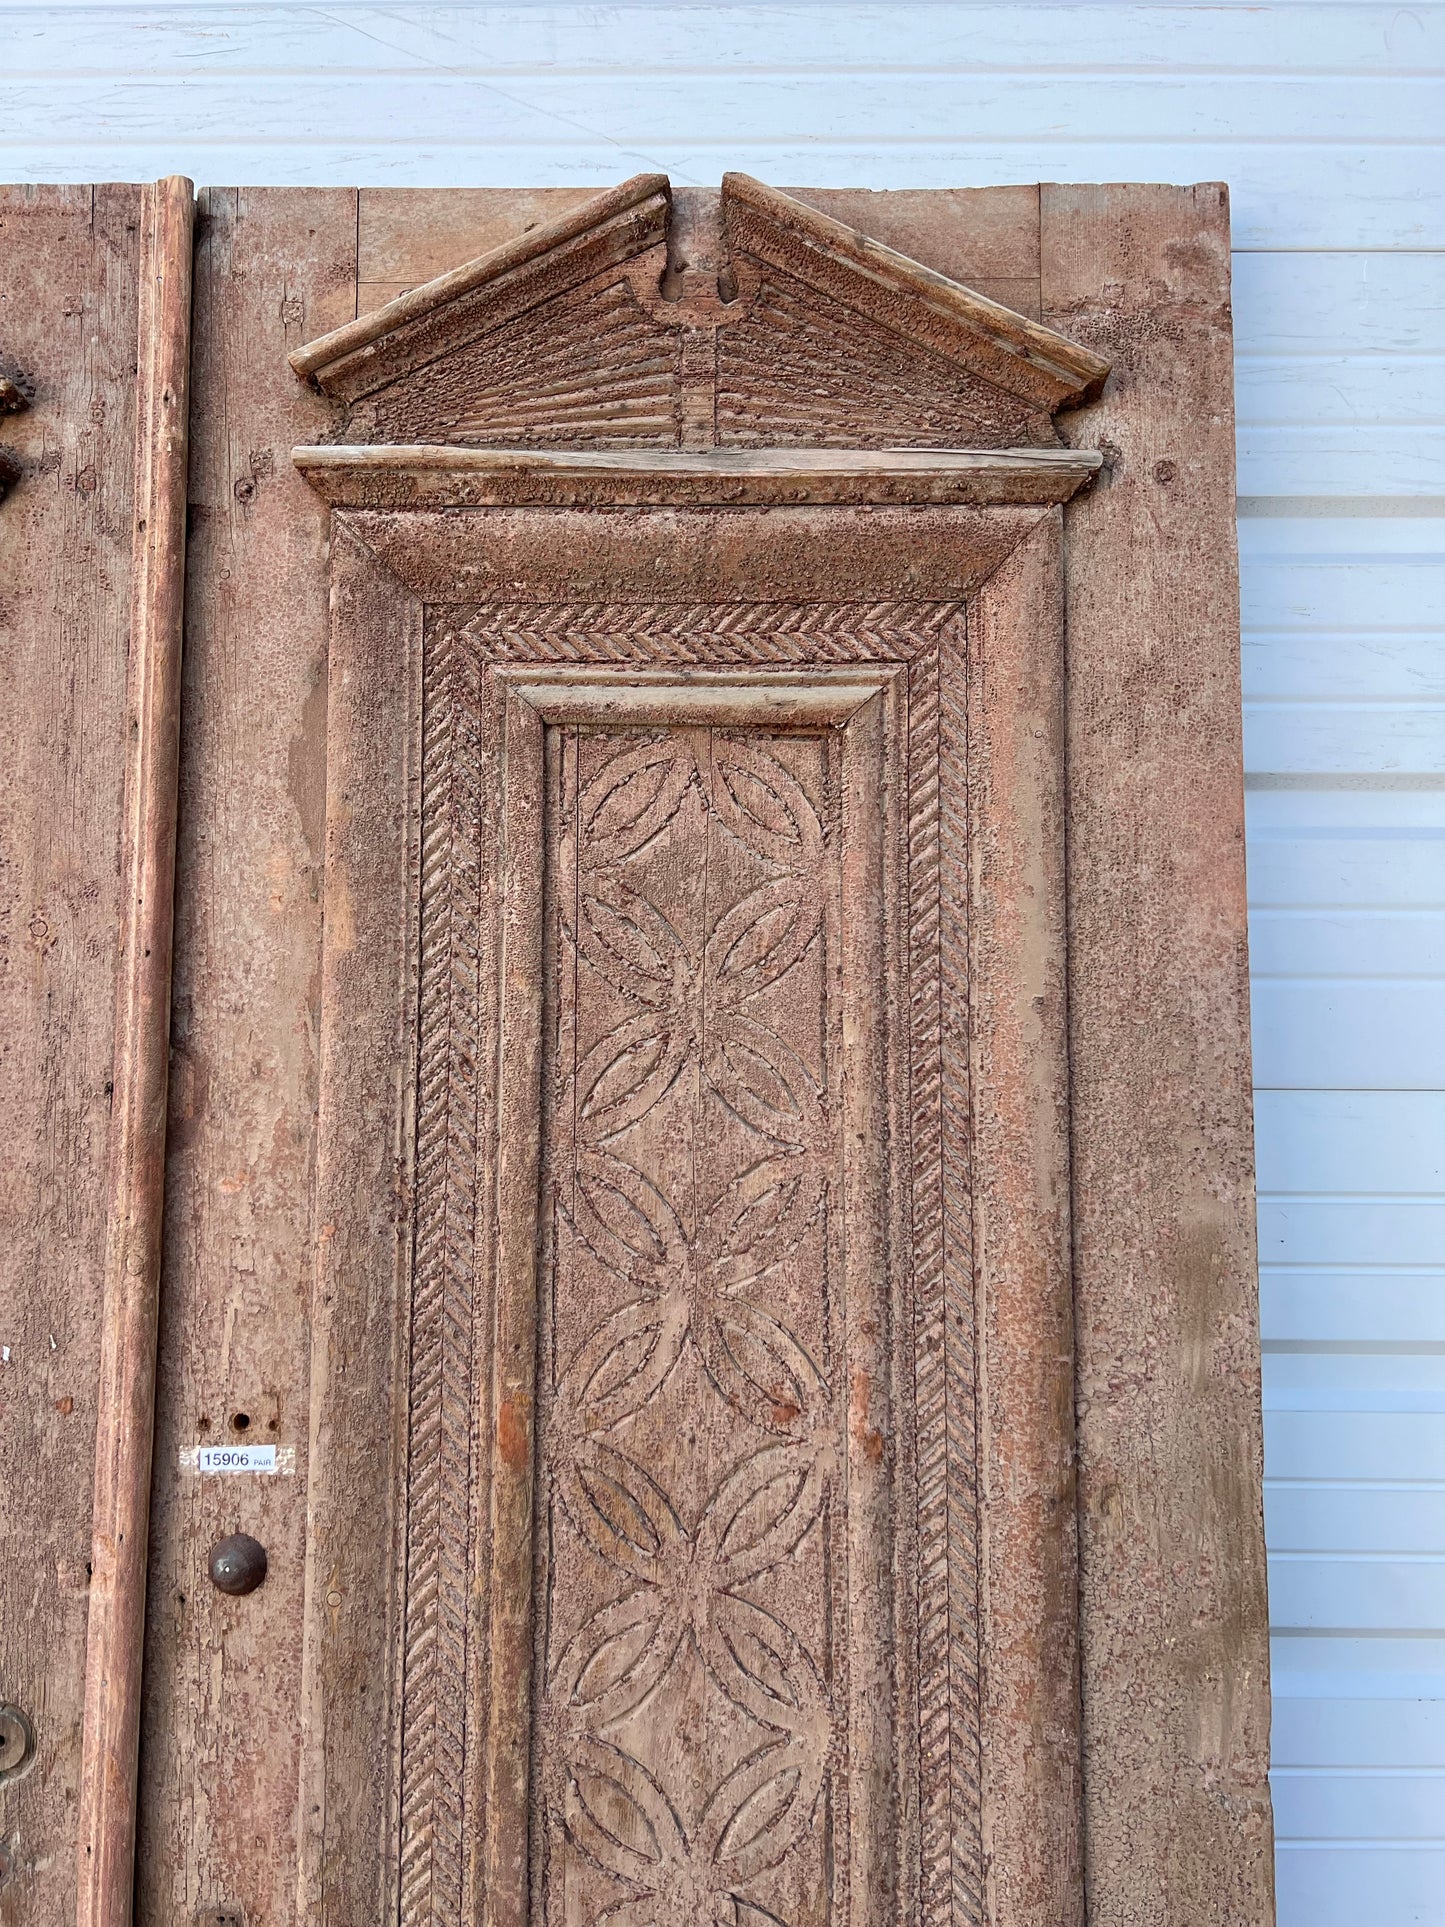 Pair of Solid Carved Wood Doors